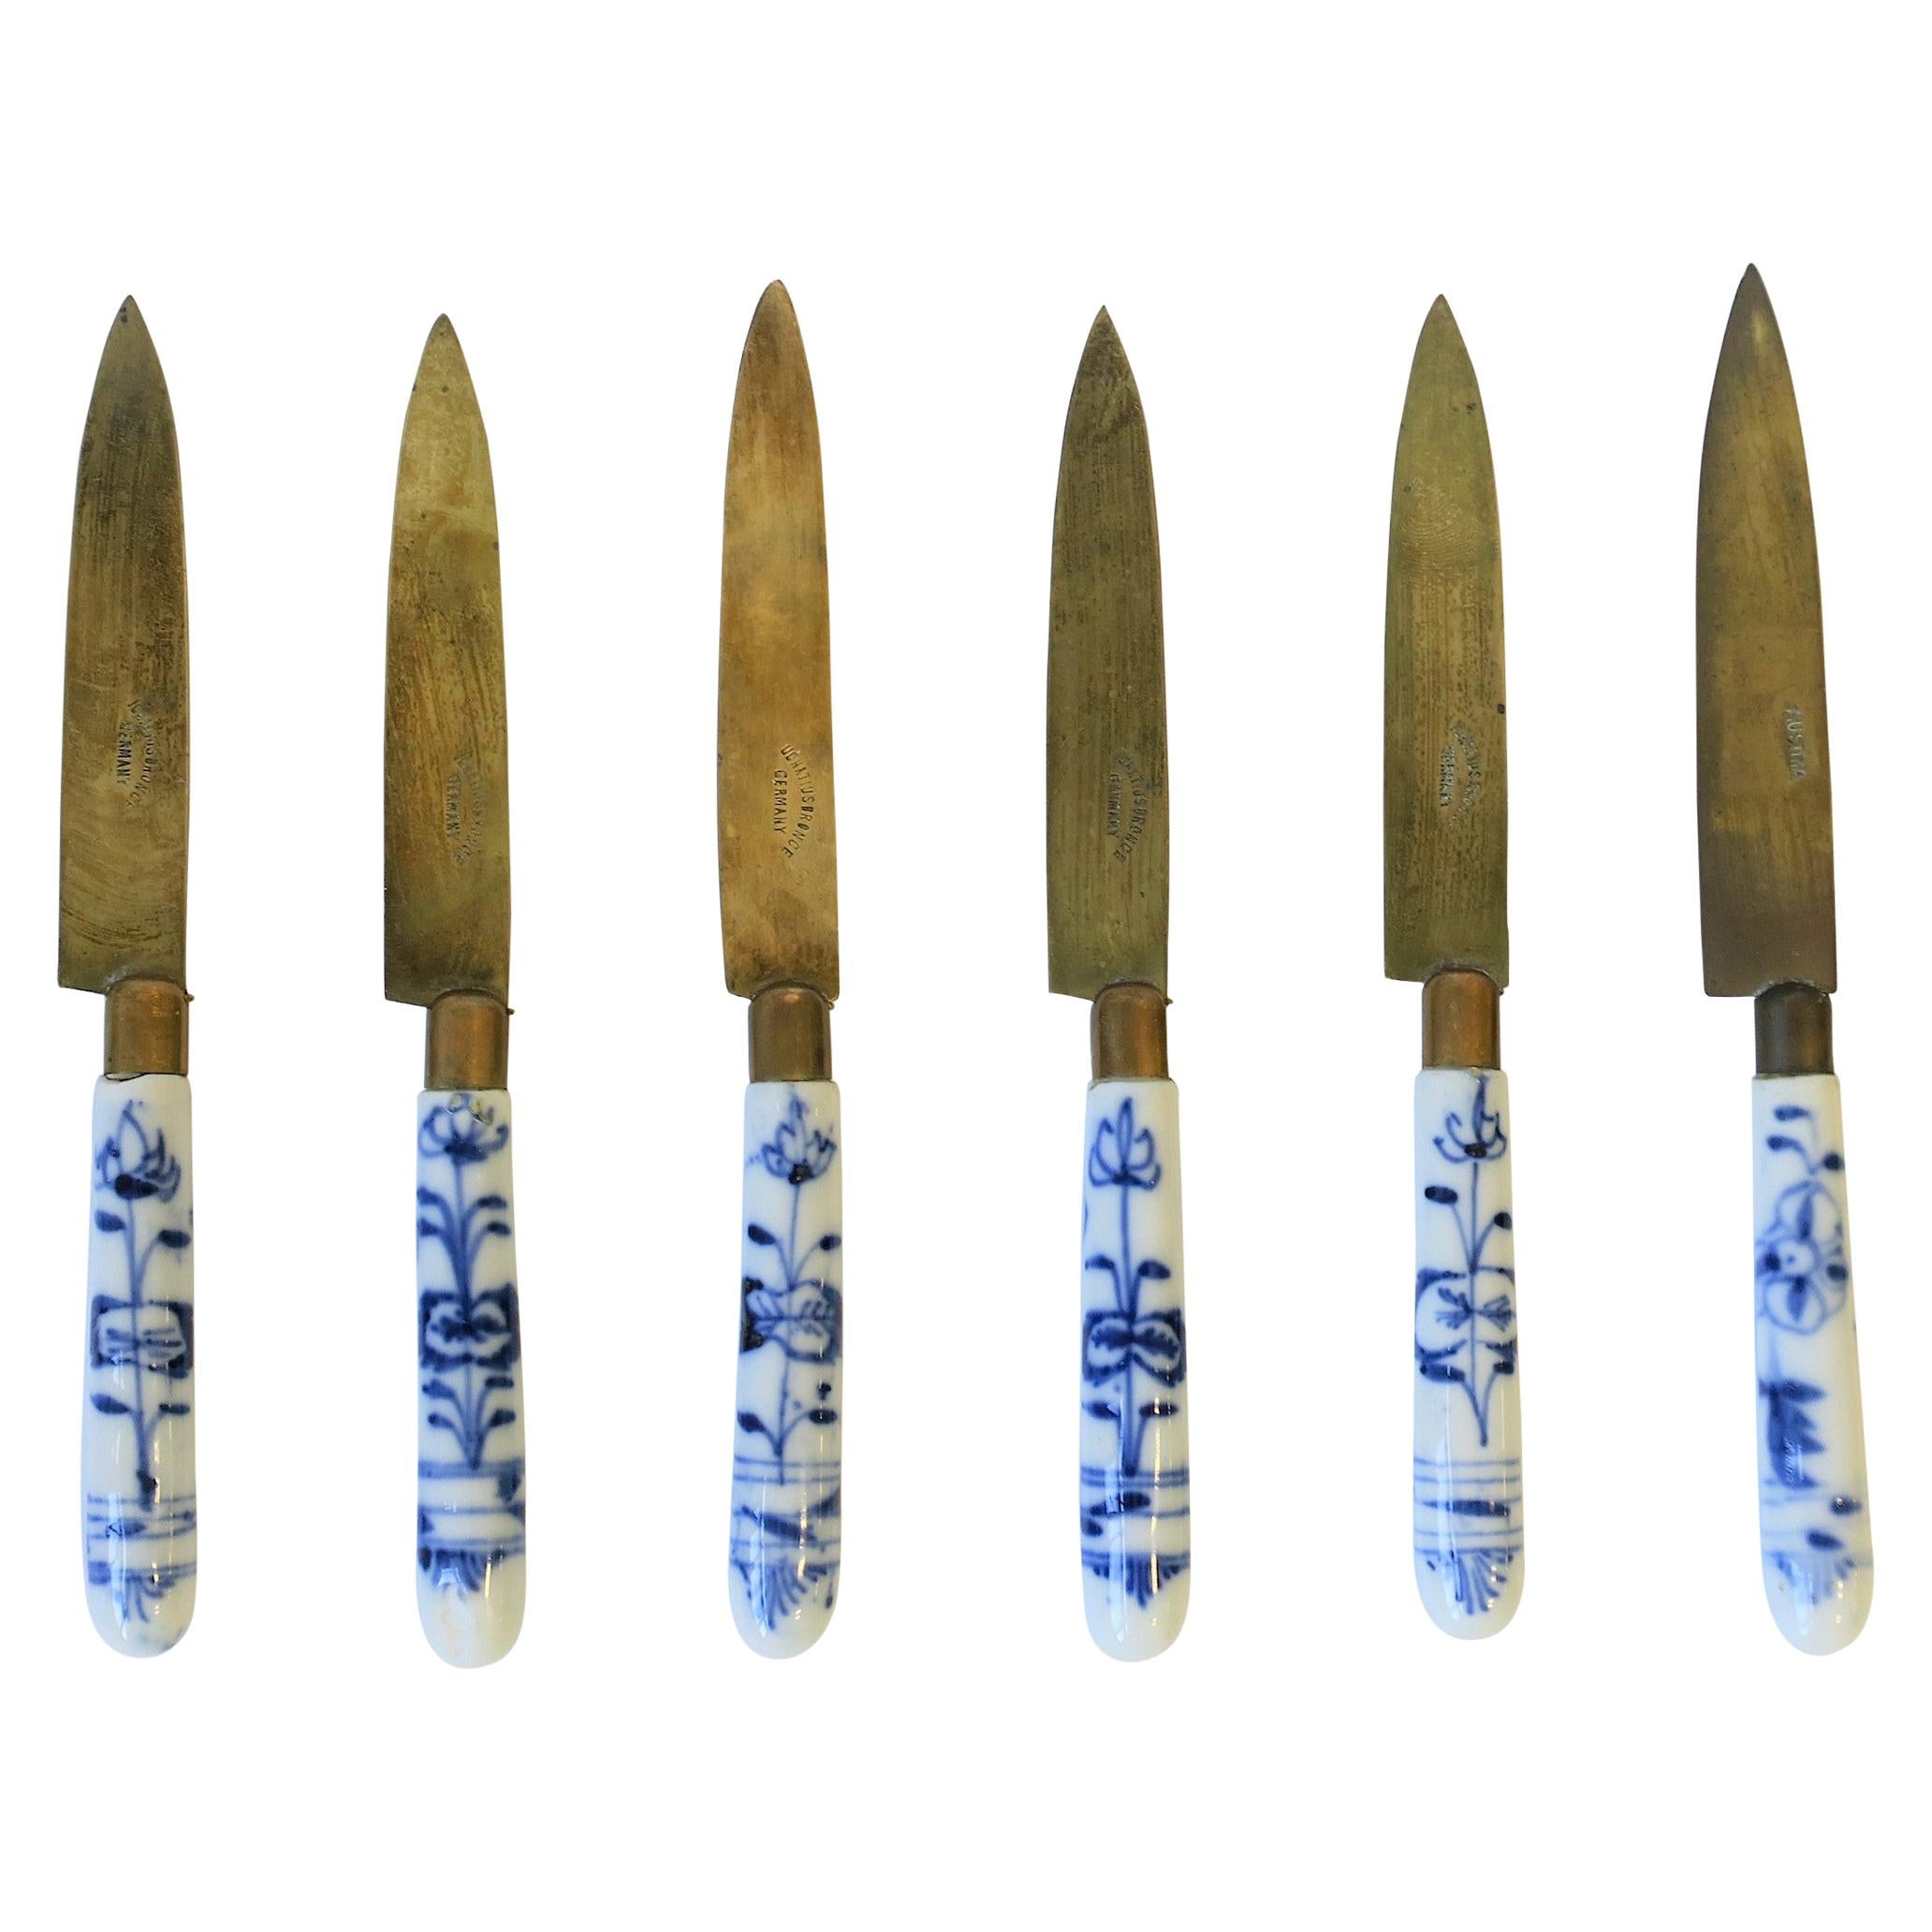 https://a.1stdibscdn.com/german-blue-and-white-porcelain-and-bronze-knife-set-for-sale/1121189/f_157546921566293269465/15754692_master.jpg